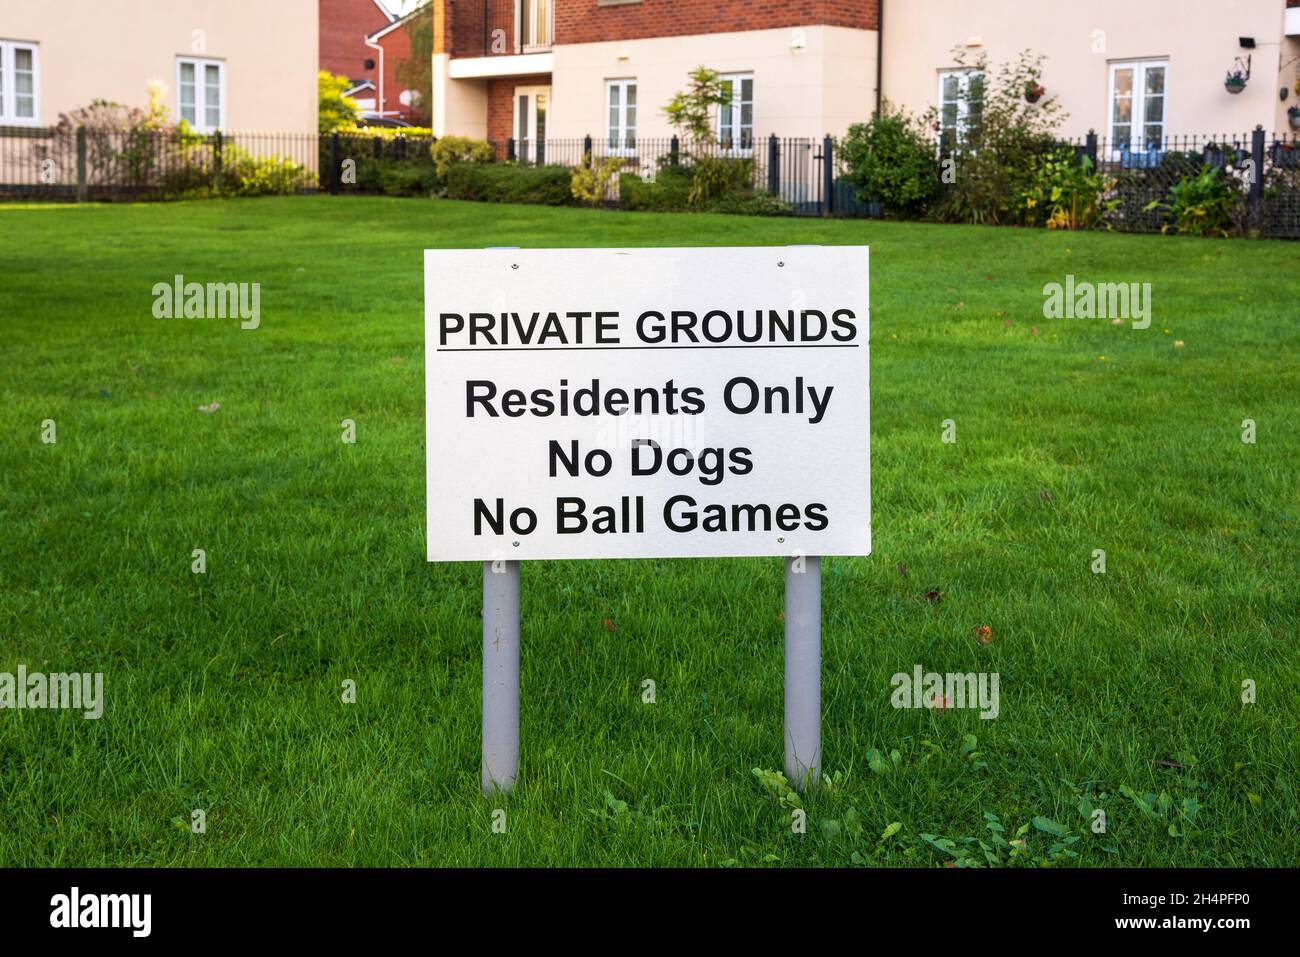 A prohibition sign banning ball games on an upmarket housing development. Stock Photo